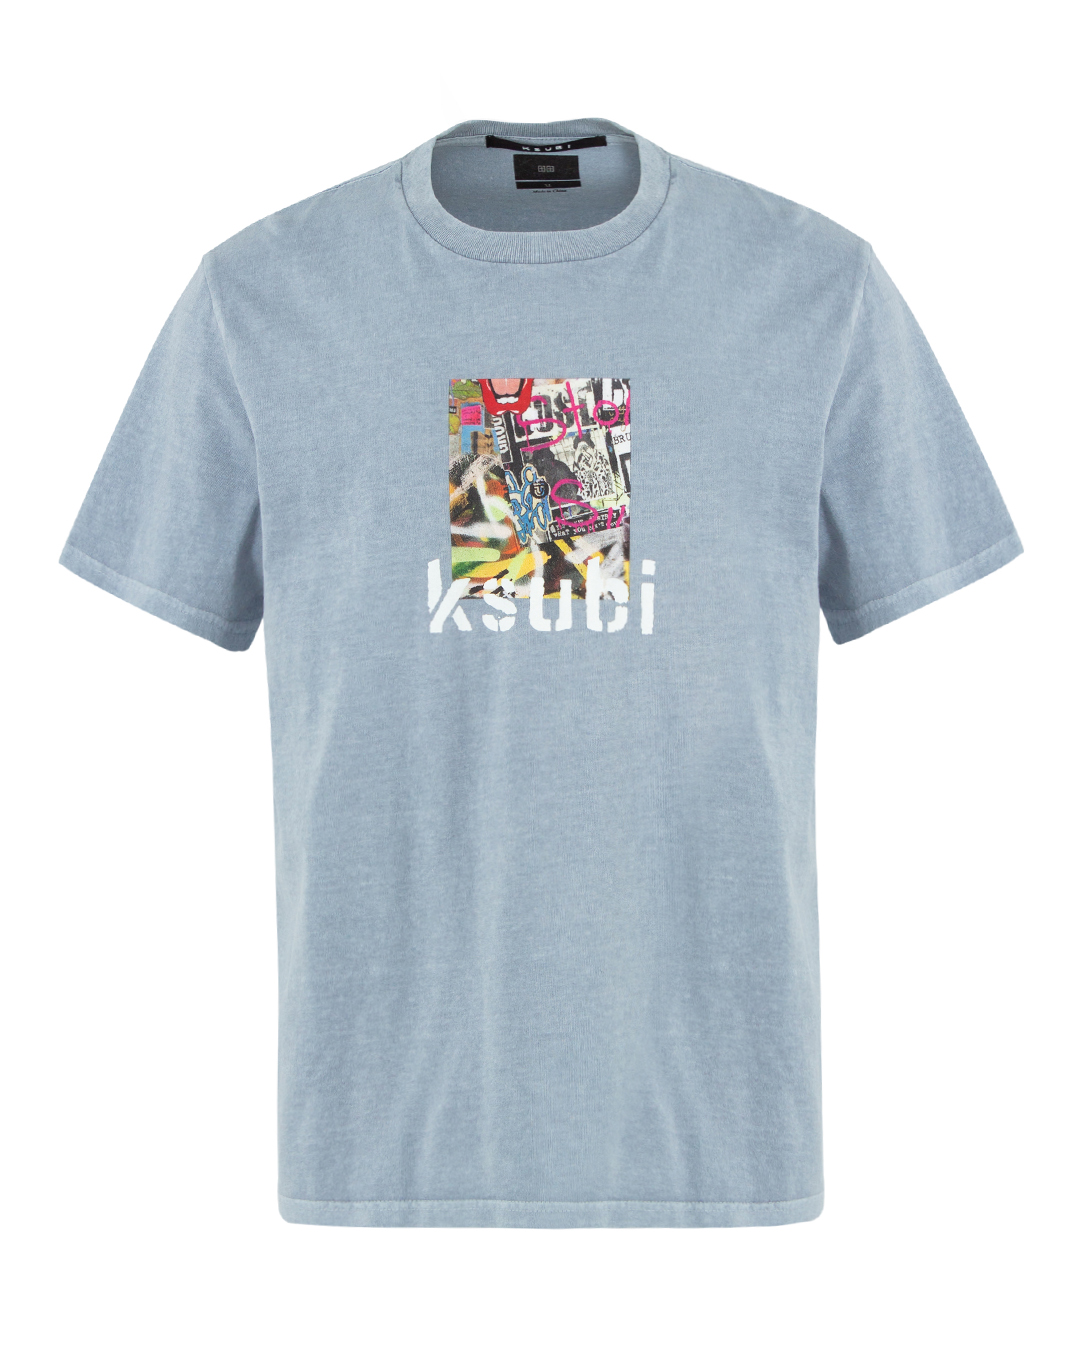 хлопковая футболка KSUBI